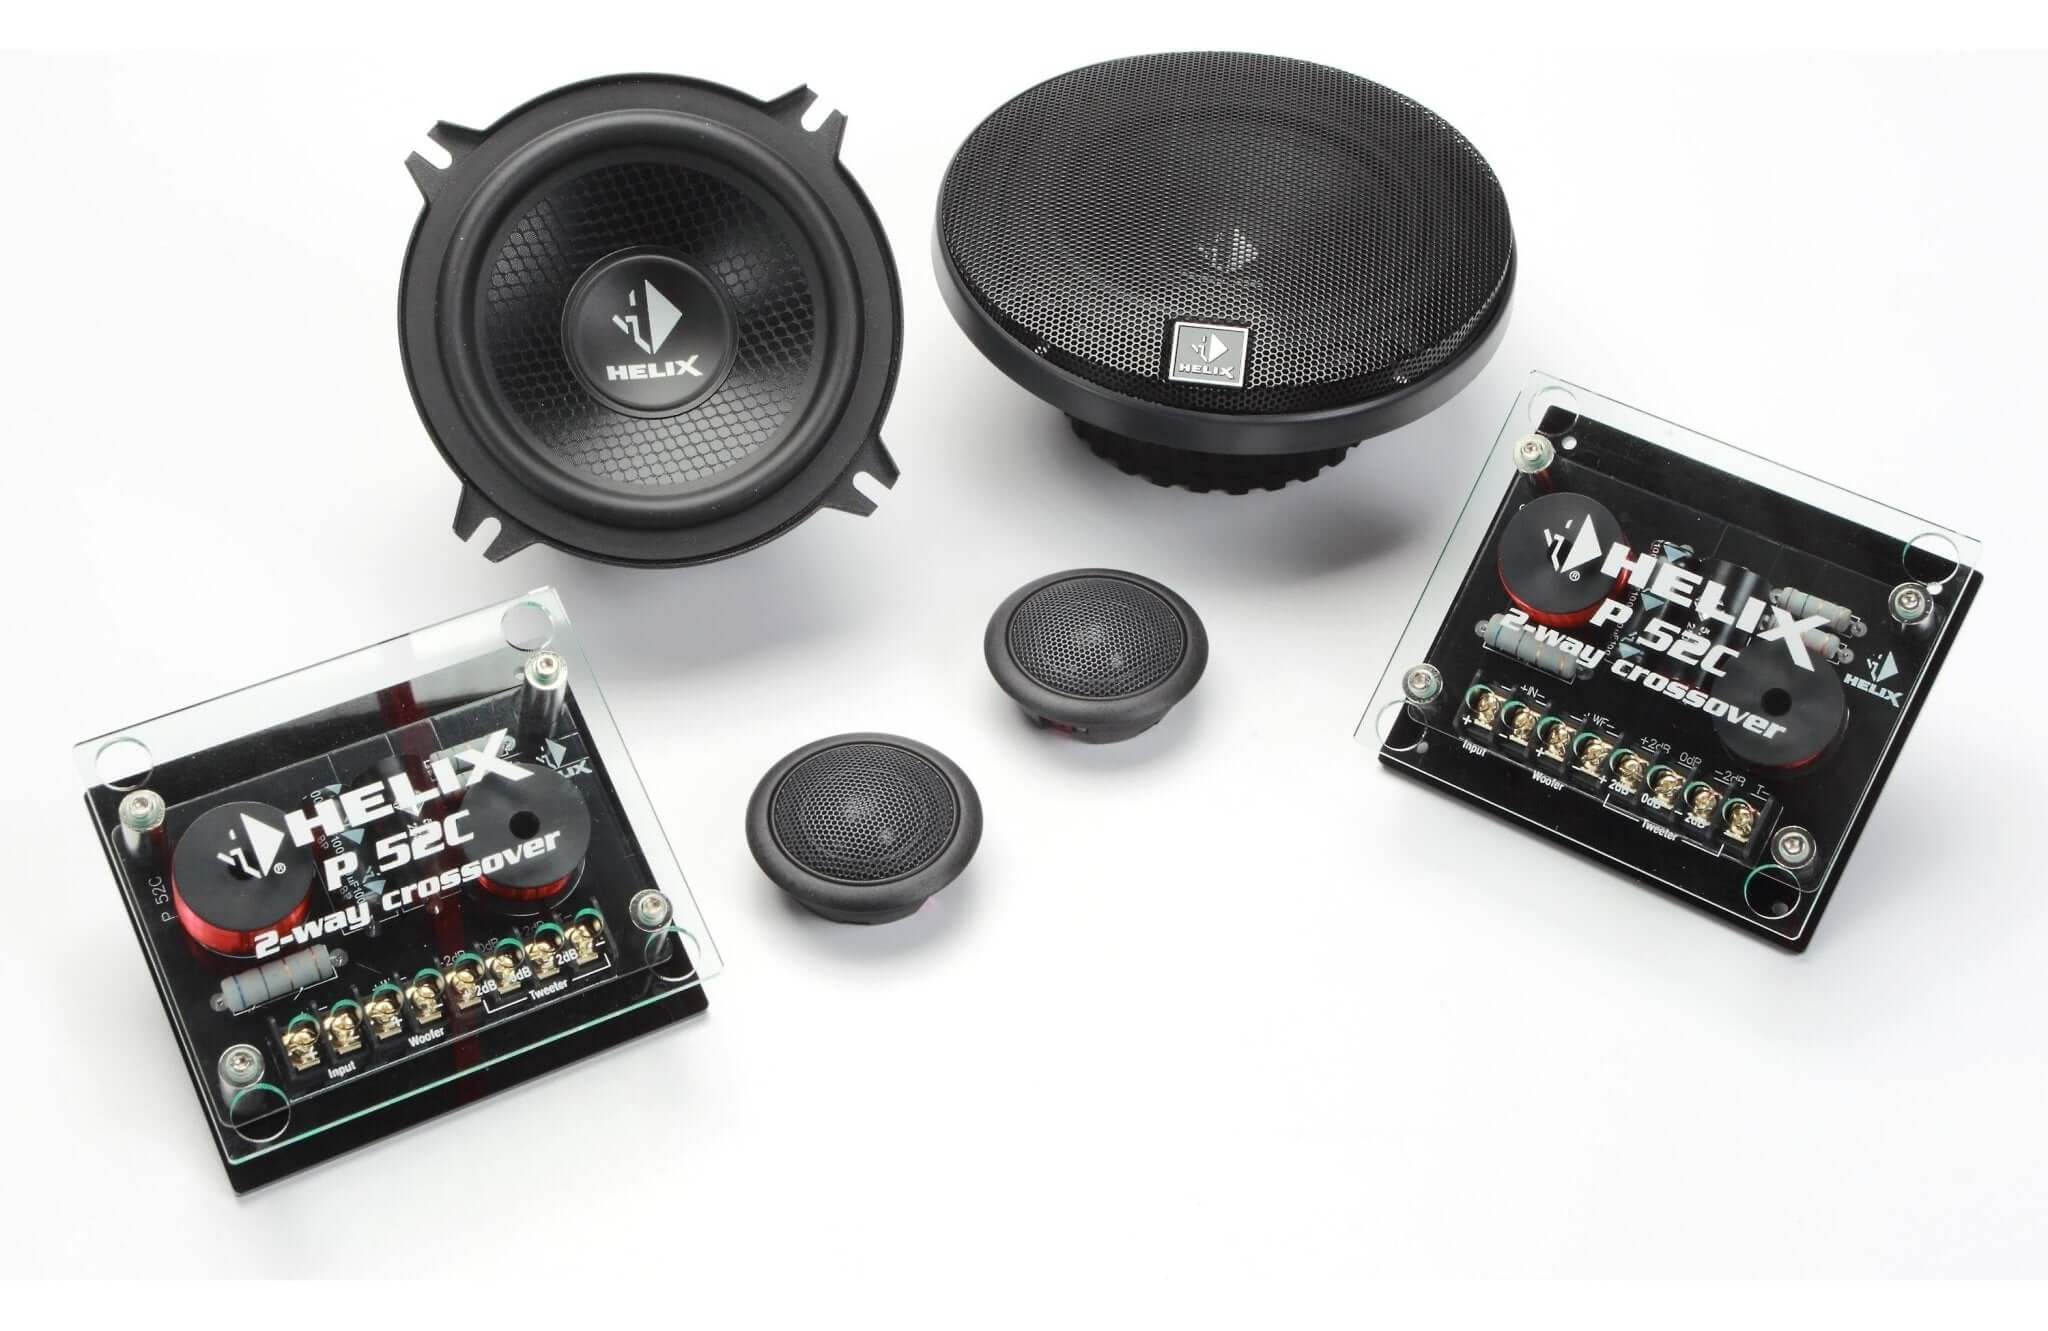 helix-p52c-5-25-2-way-component-speaker-system